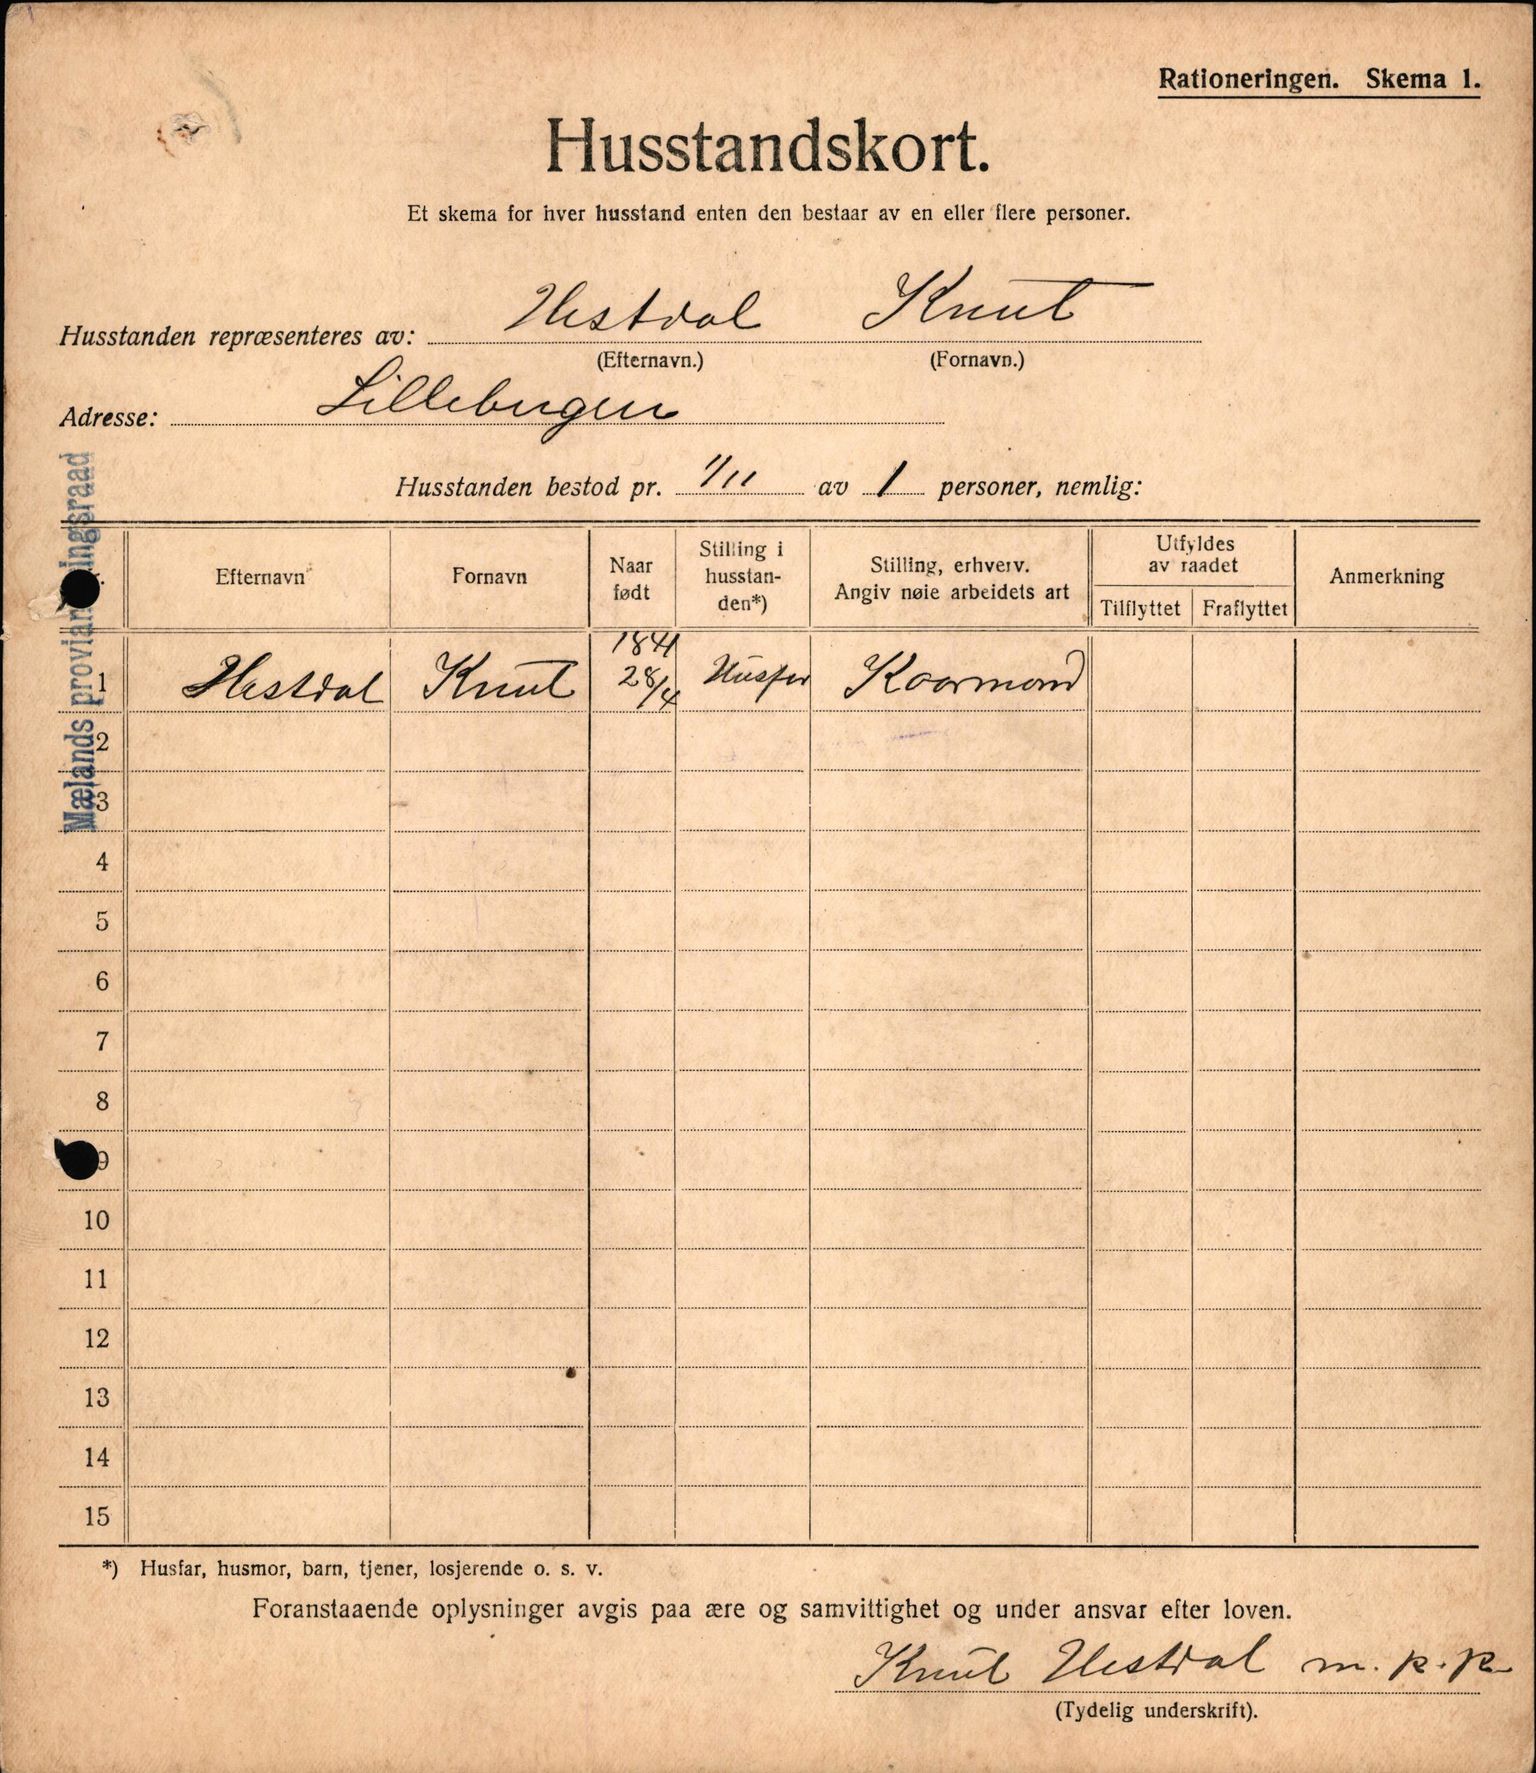 IKAH, Meland kommune, Provianteringsrådet, Husstander per 01.11.1917, 1917-1918, s. 269